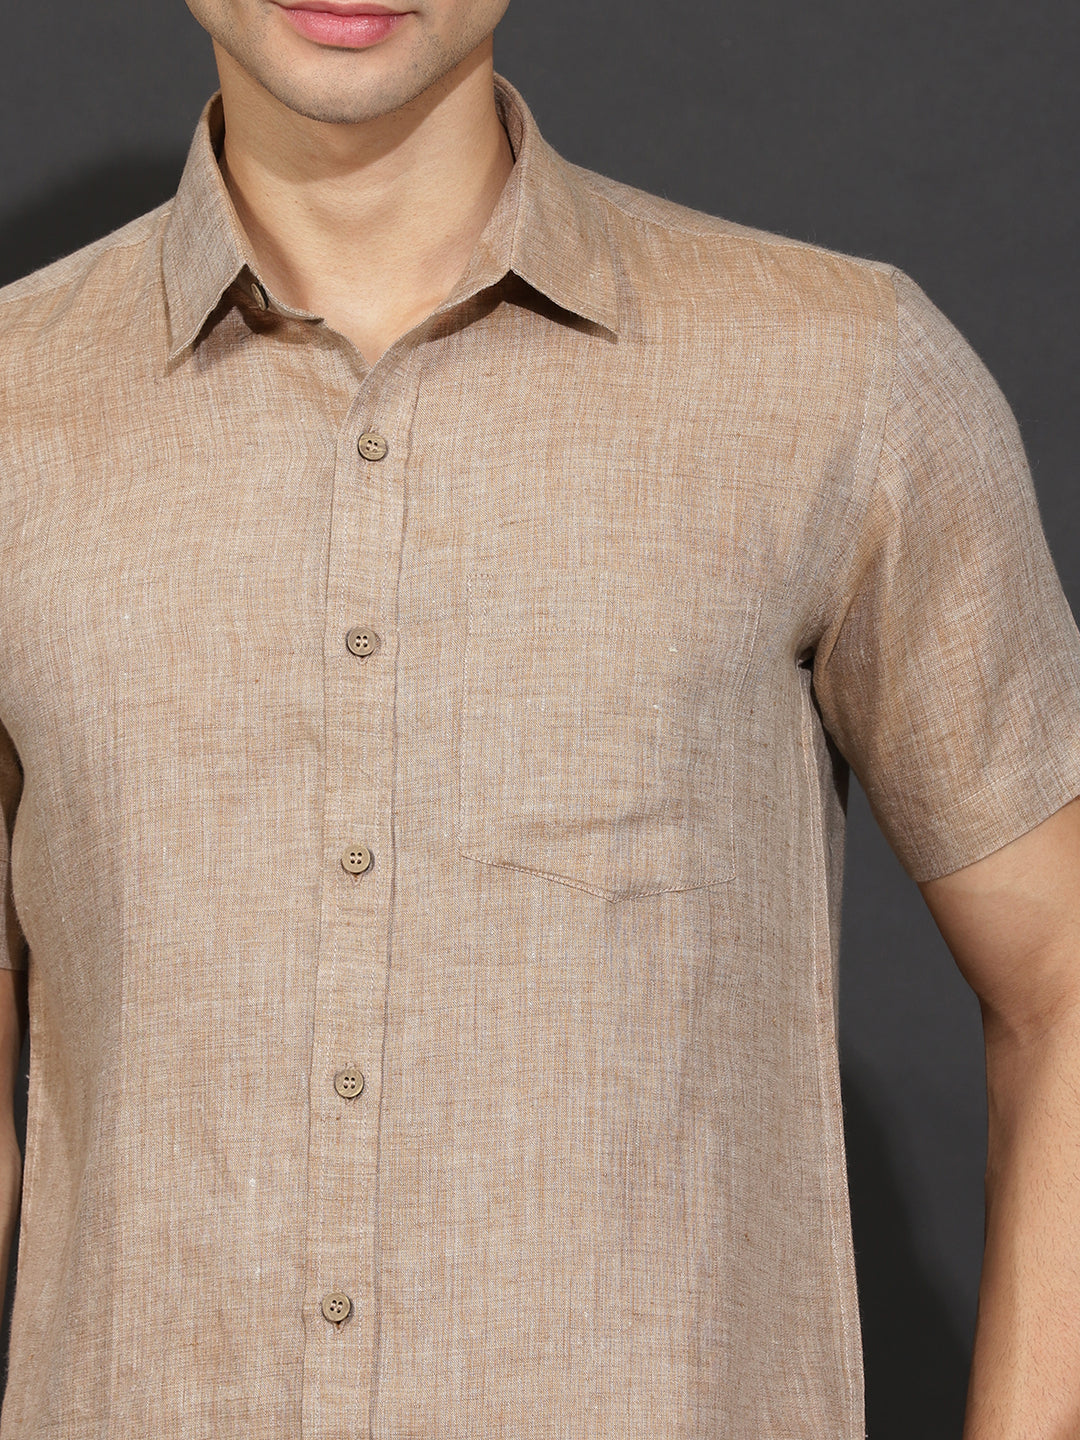 Scolet - Pure Linen Half Sleeve Shirt - Mocha